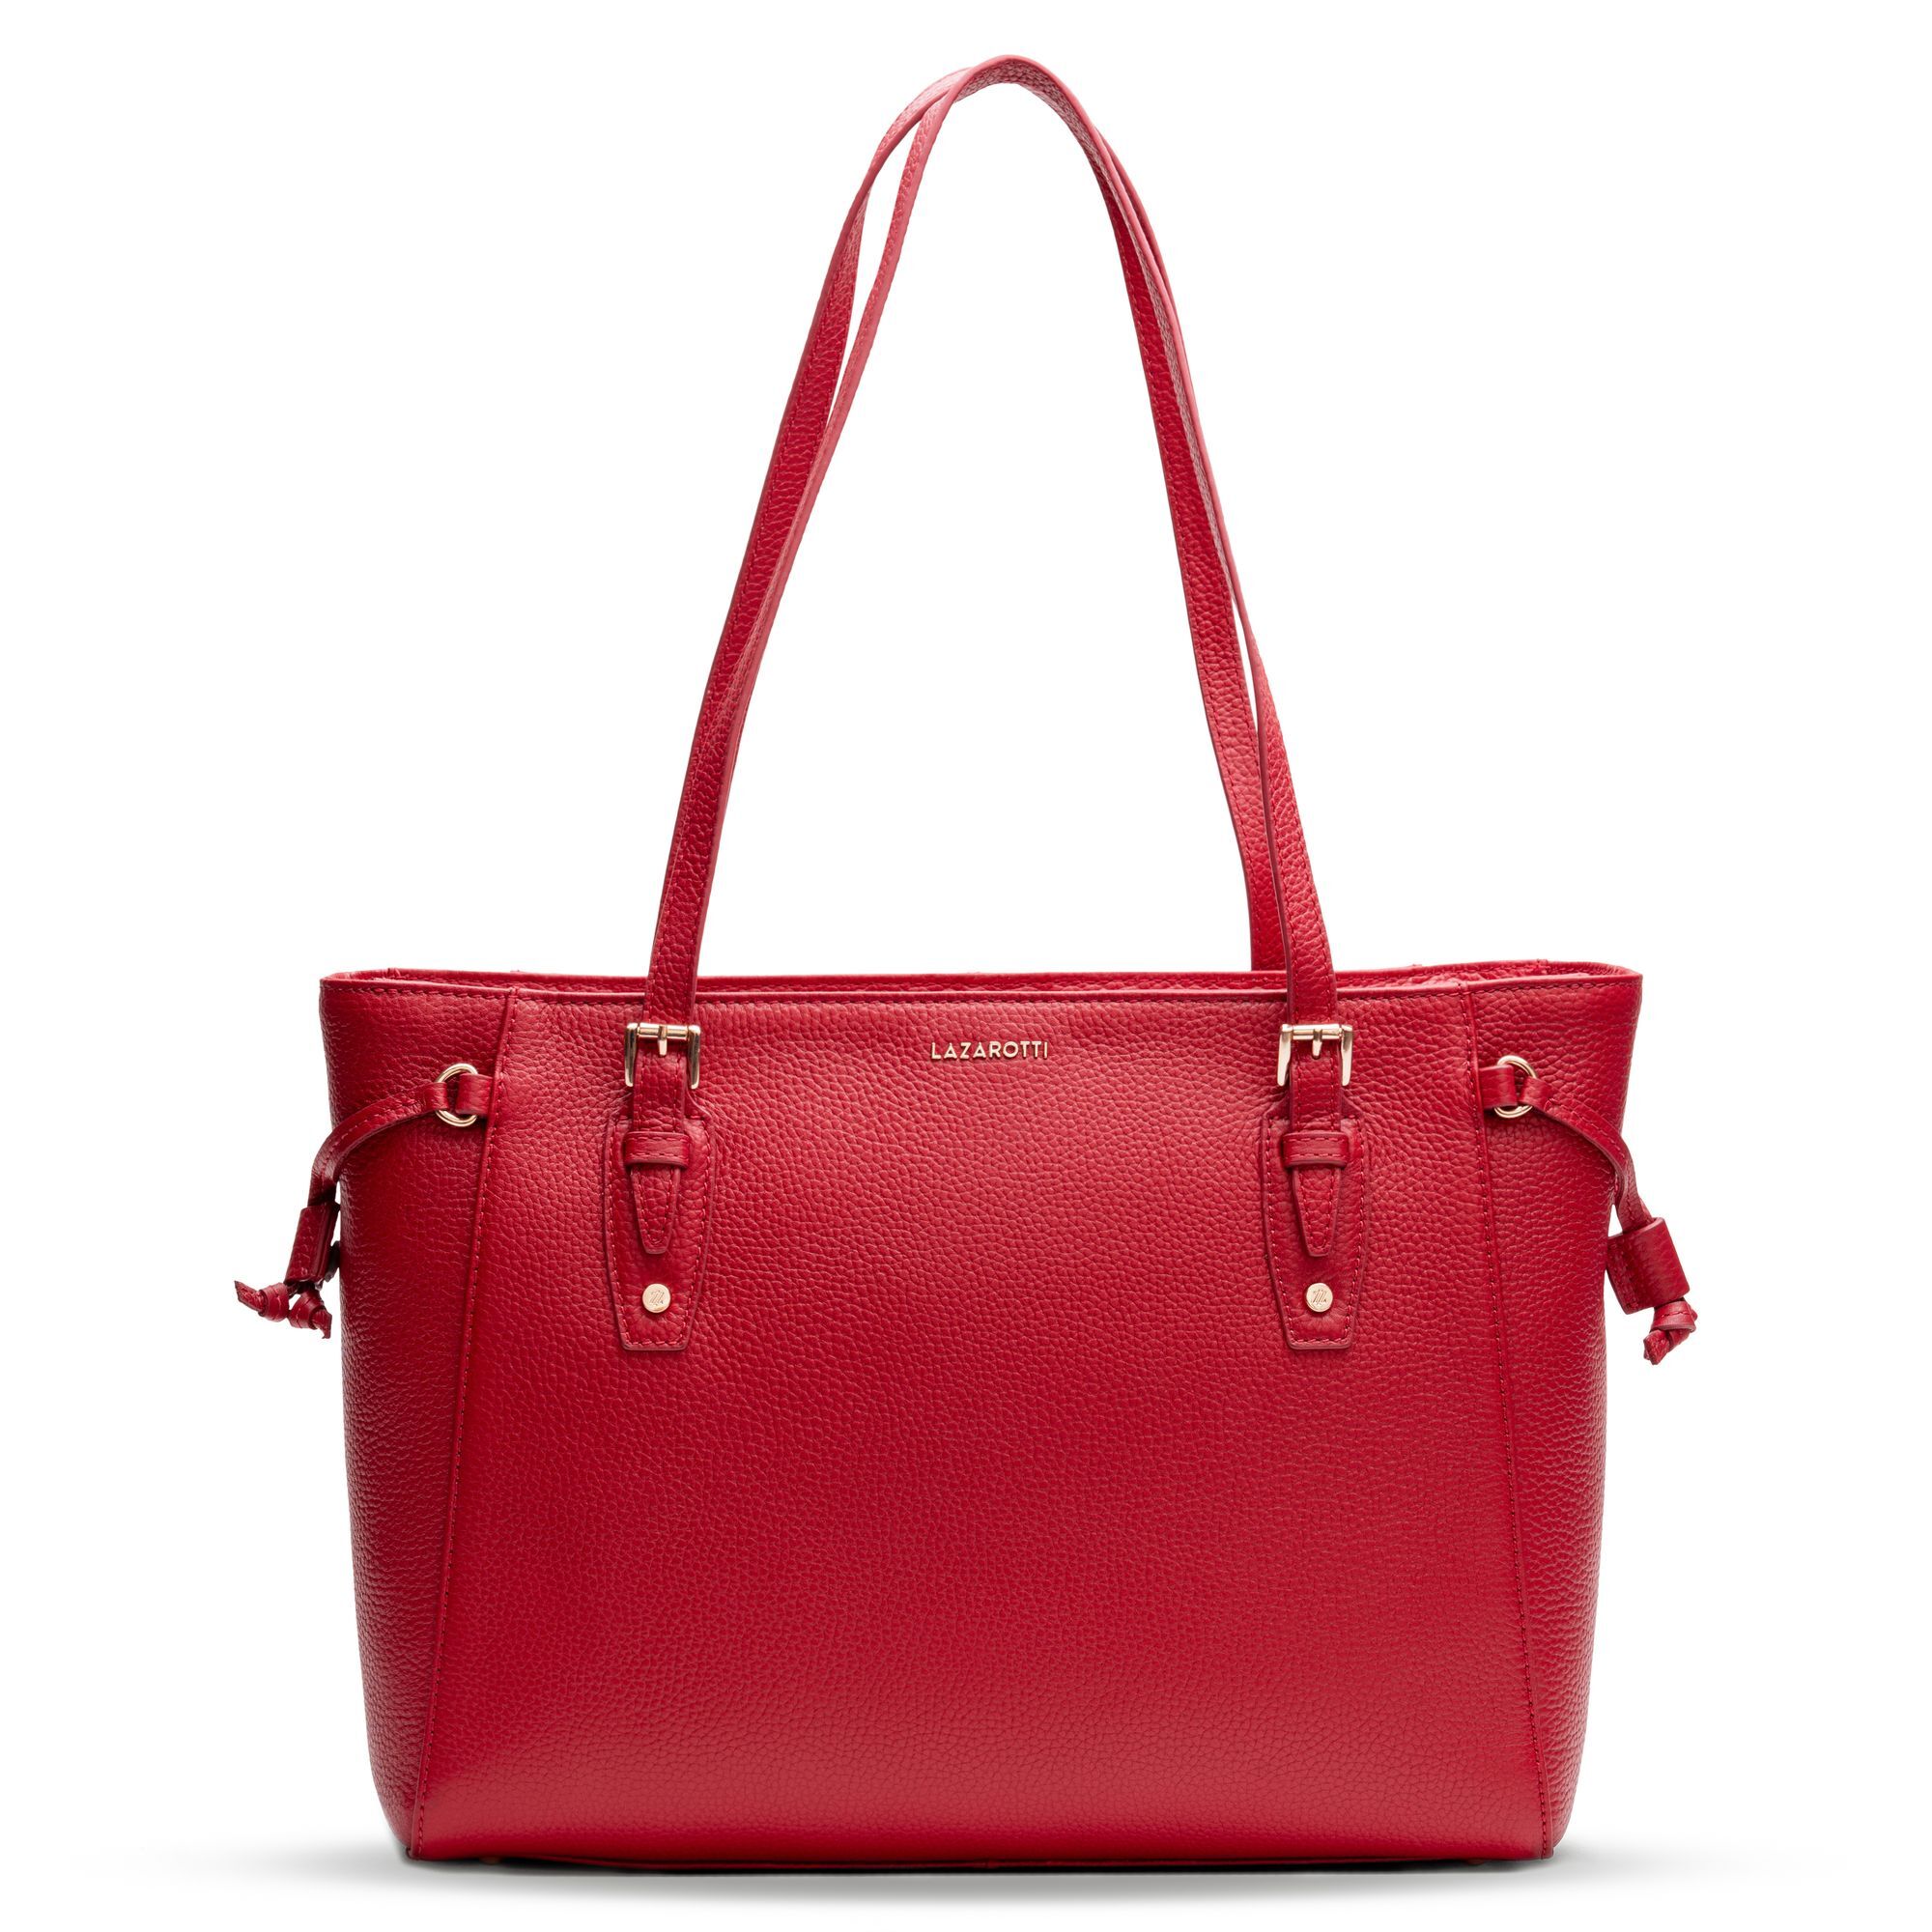 Сумка шоппер Lazarotti Bologna Leather Tasche Leder 36см, красный